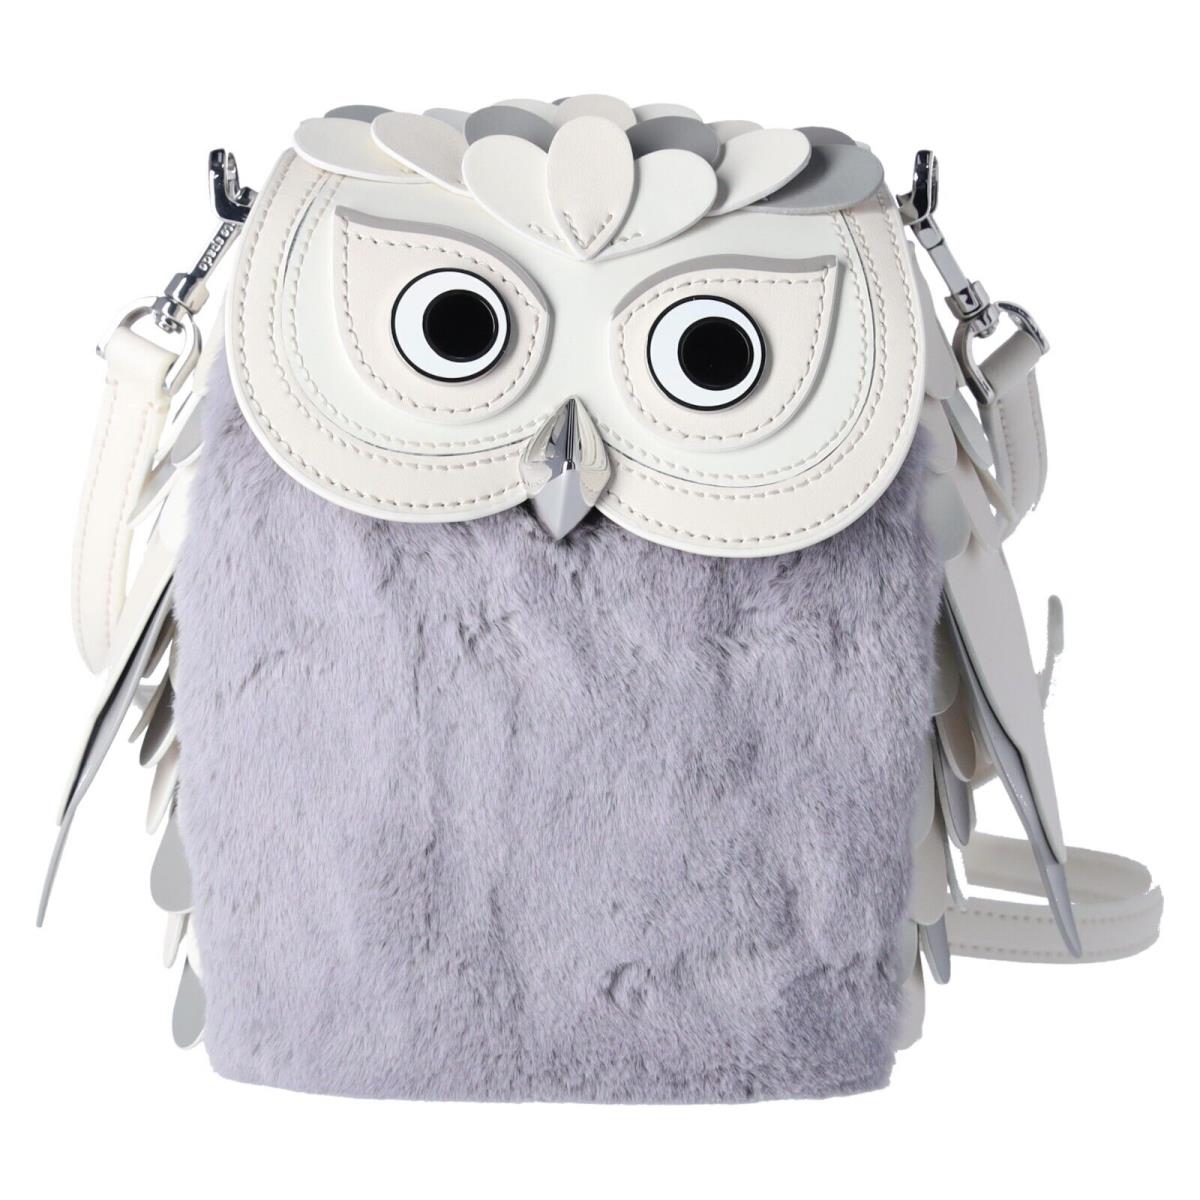 Kate Spade Hoot Gray 3D Owl Crossbody Bag Novelty Limited Edition - Handle/Strap: White, Exterior: Gray, Lining: Gray